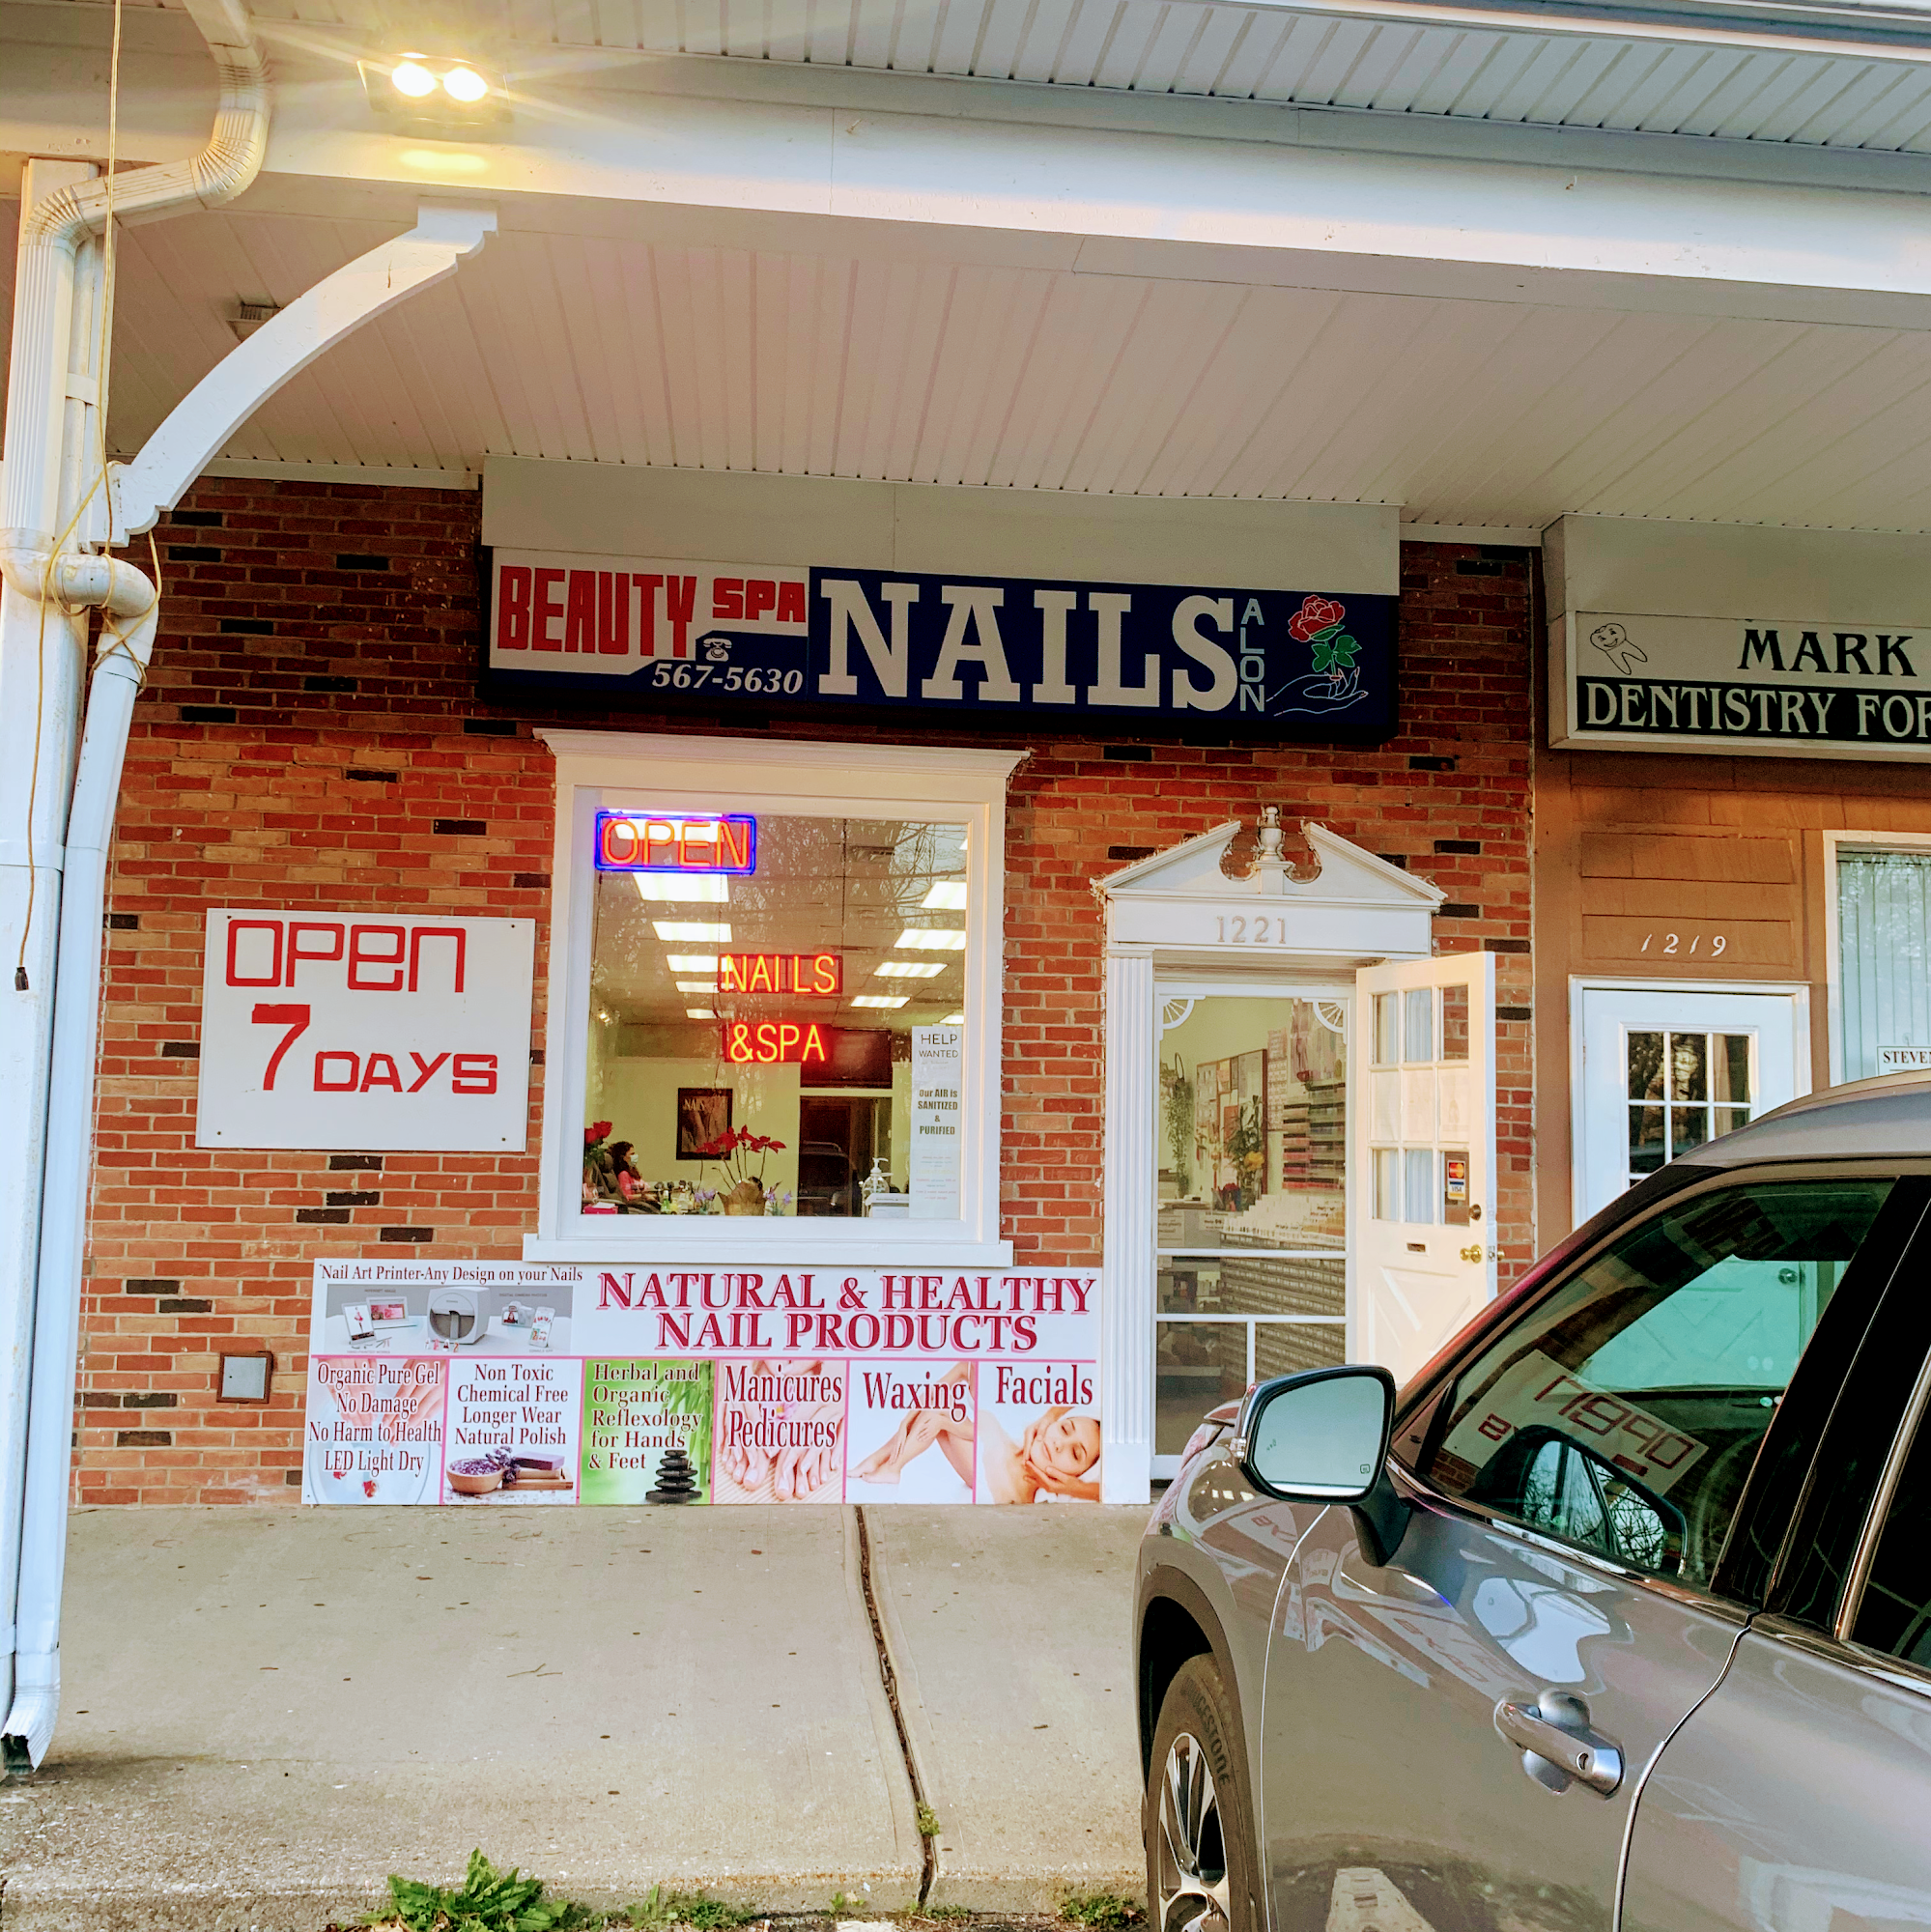 Beauty Spa Nail Salon Inc